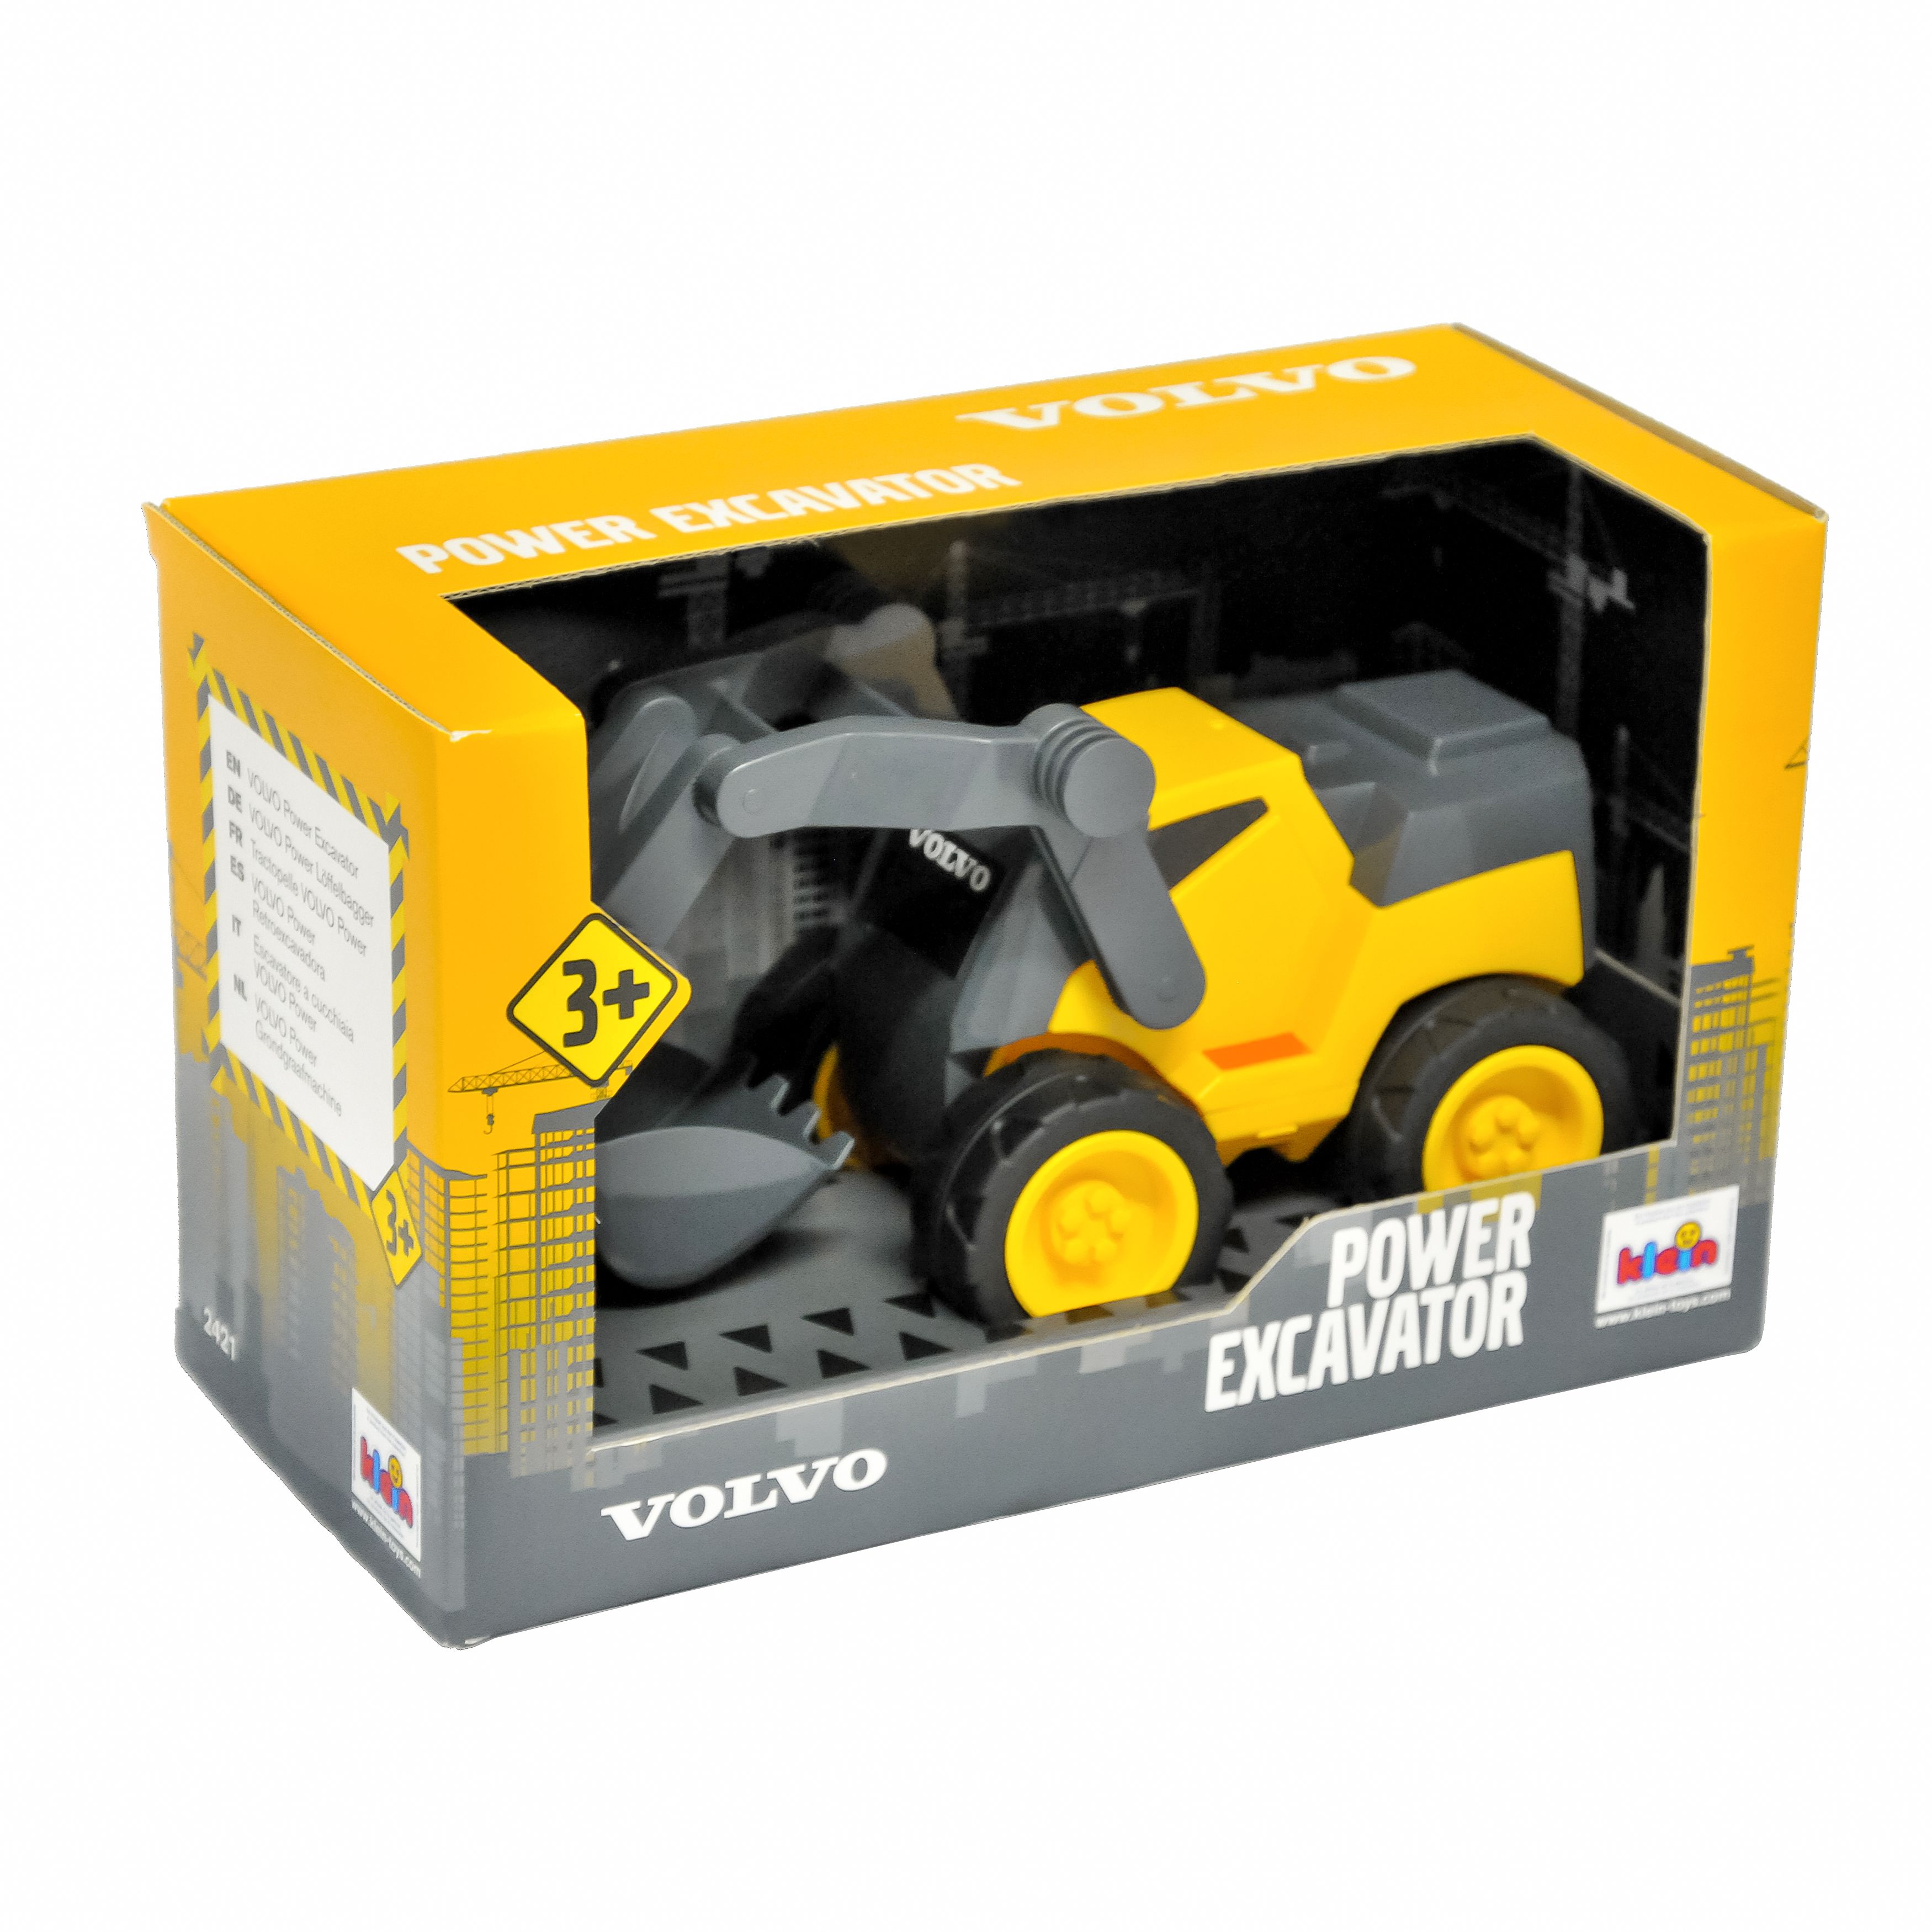 Экскаватор Klein Volvo, в коробке, желтый (2421) - фото 1